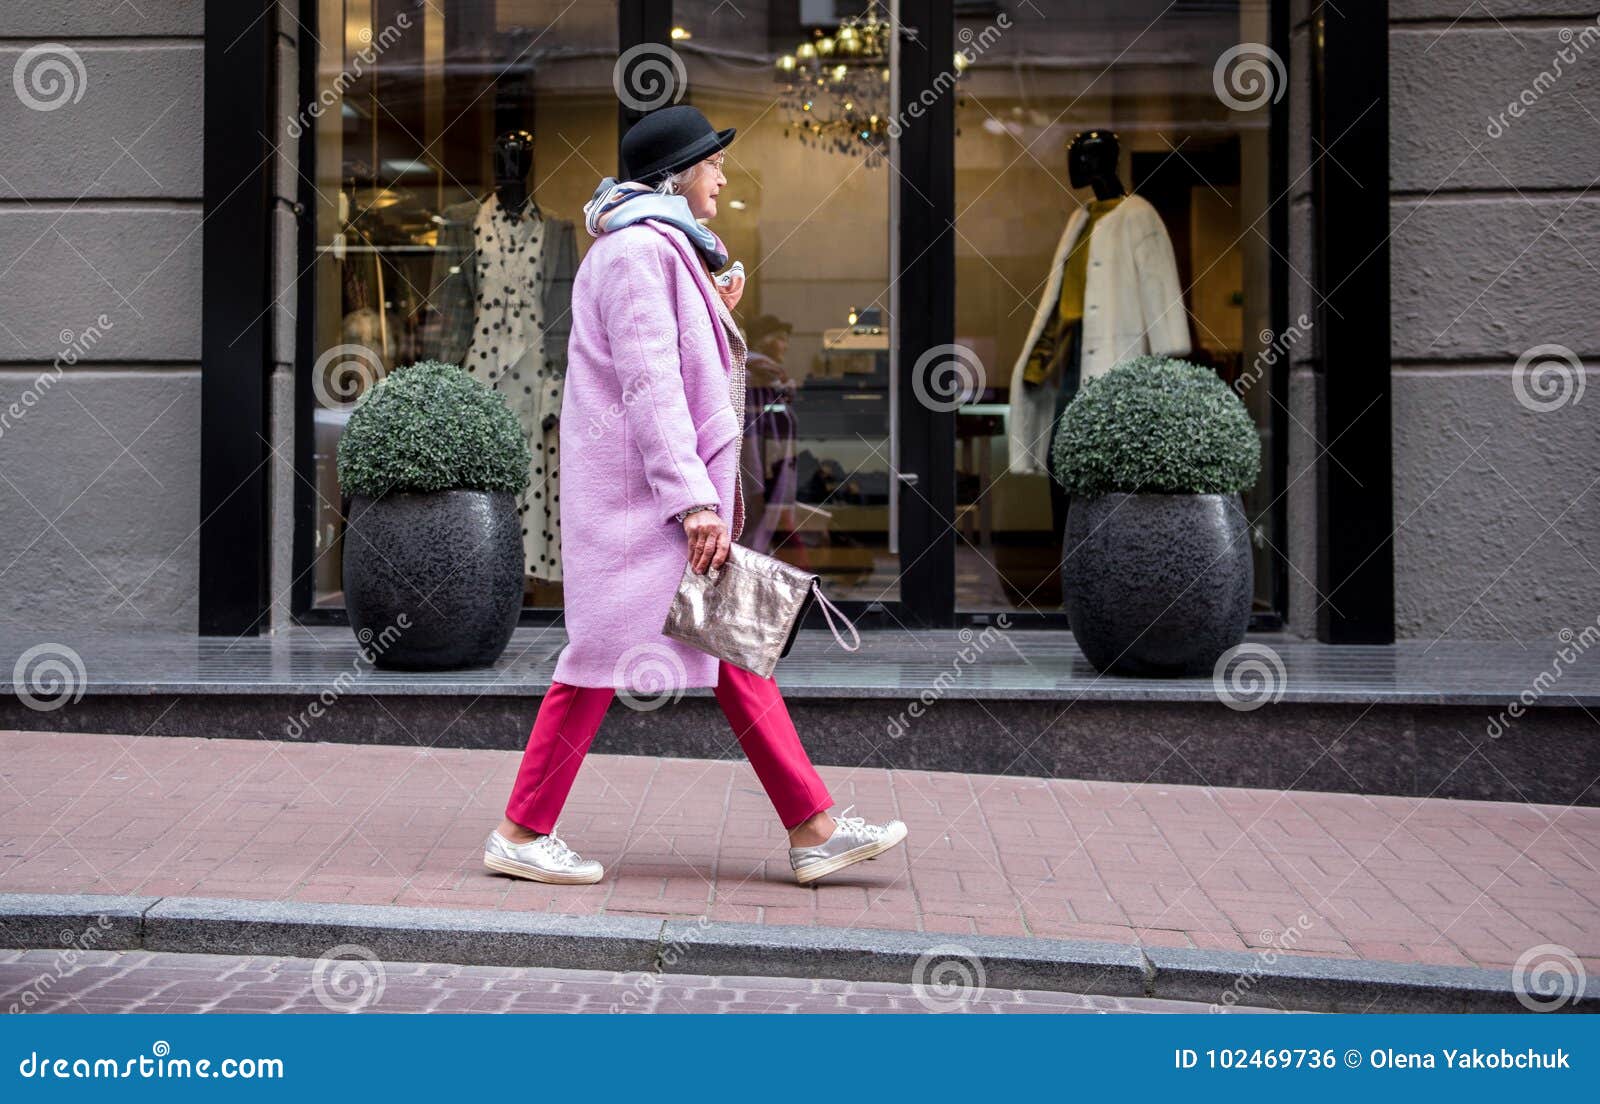 old woman walking side view